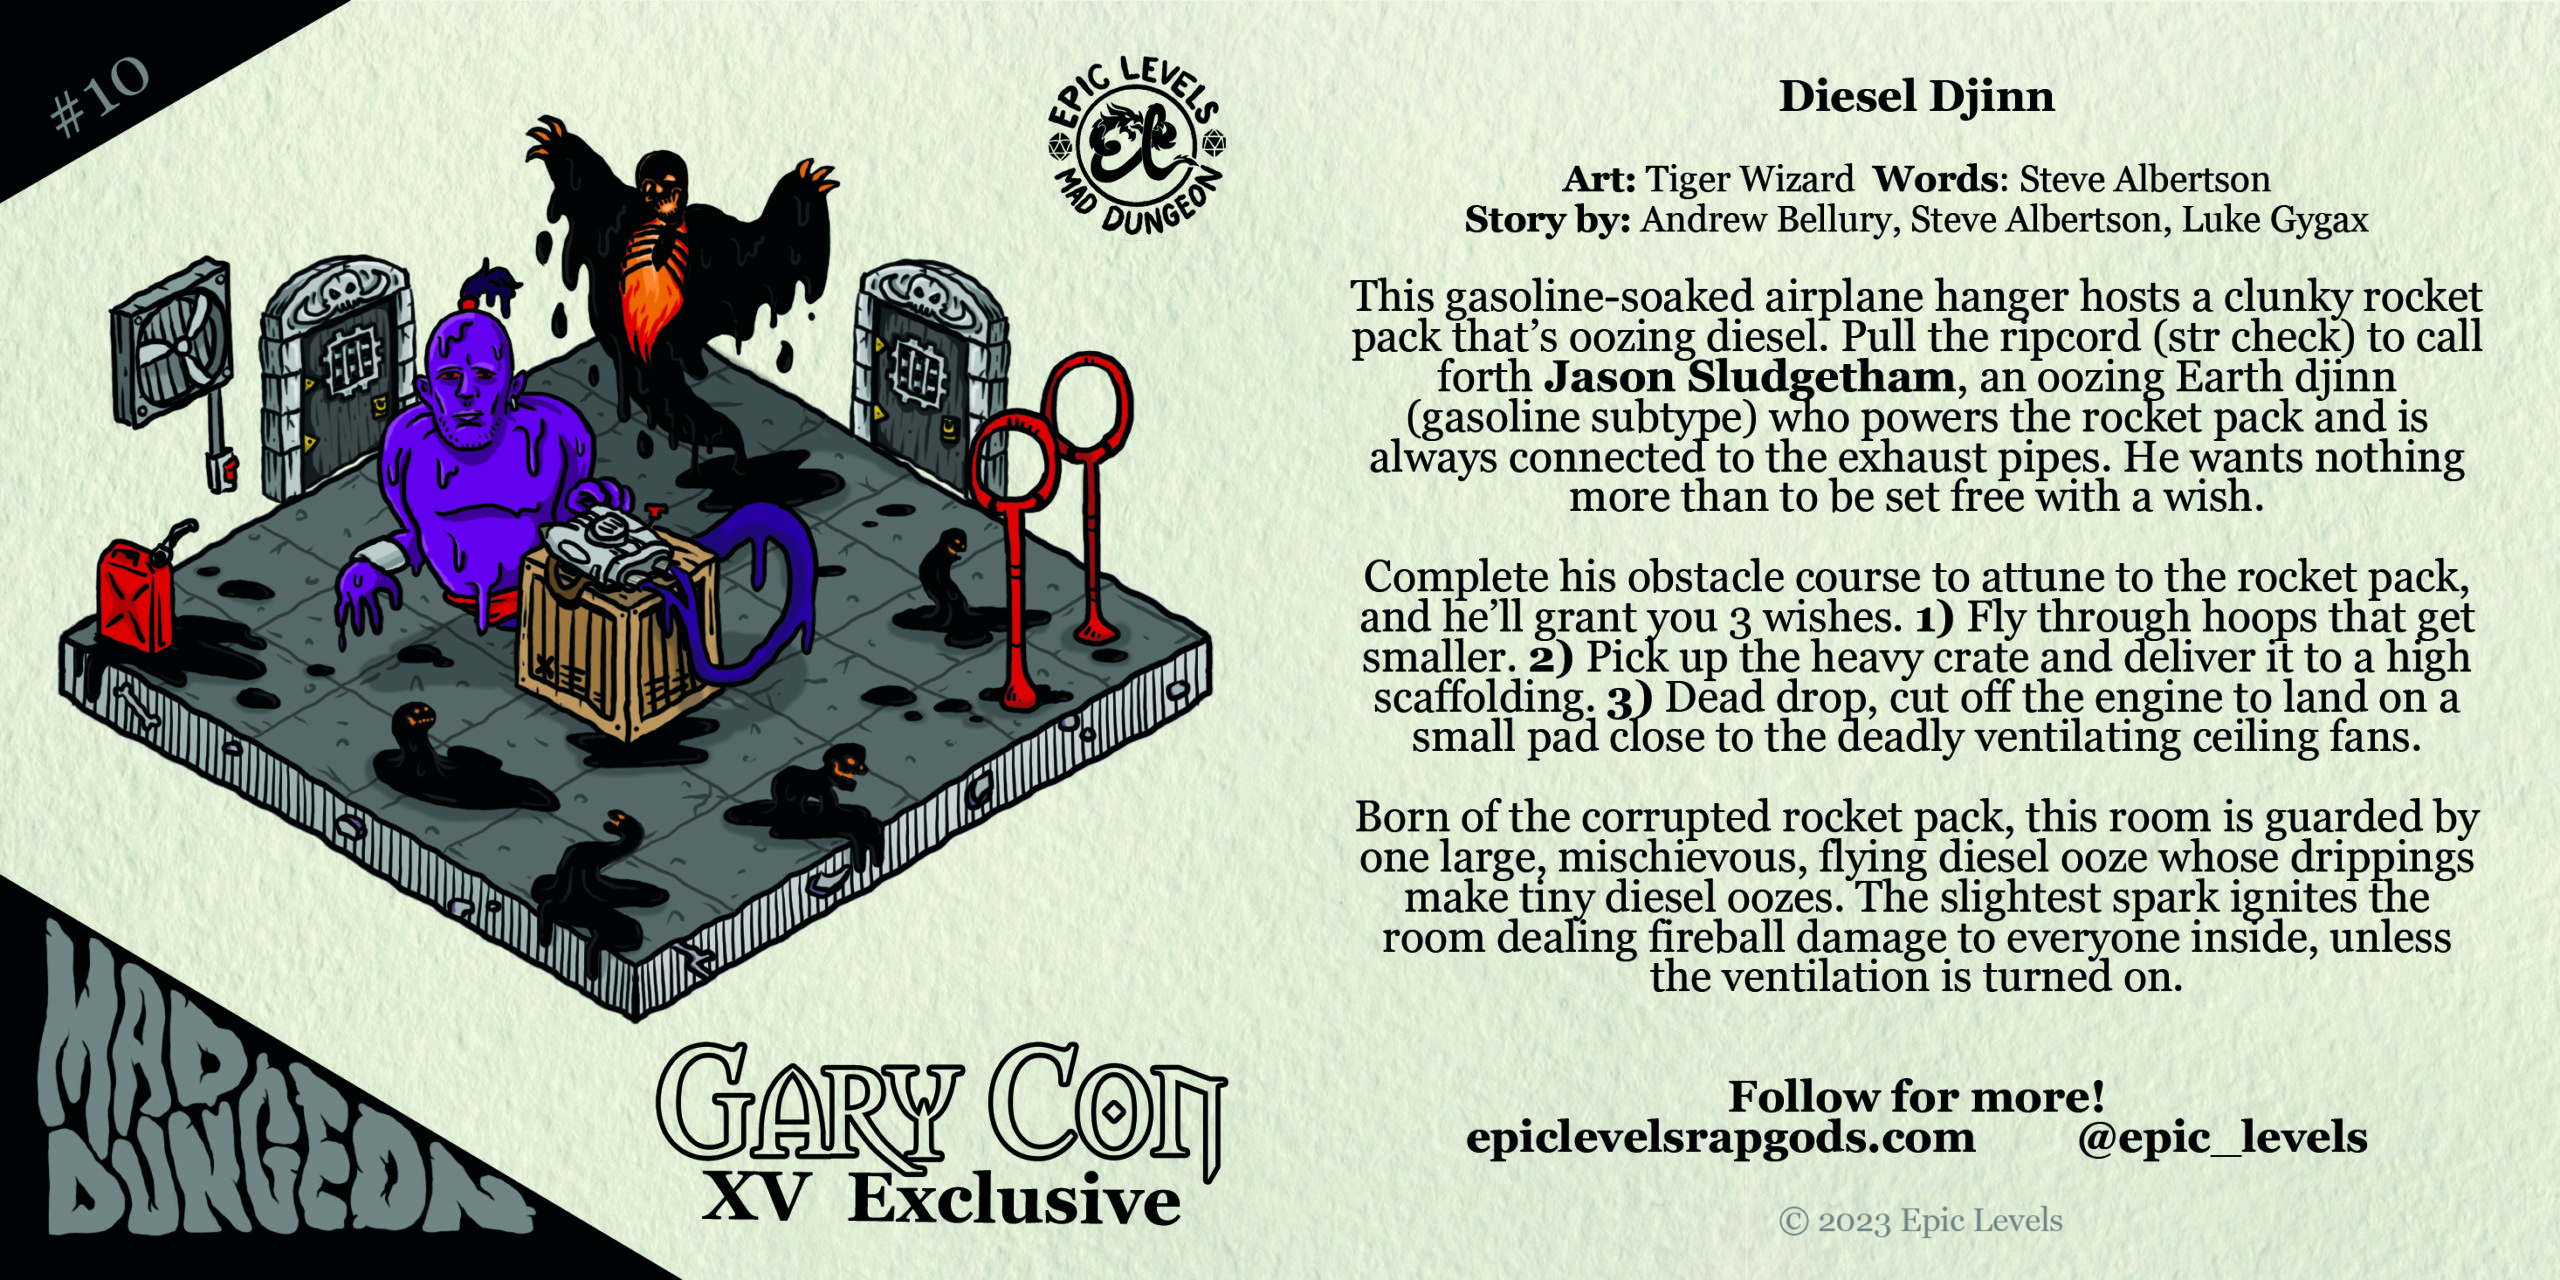 MD 209 Diesel Djinn w/ Luke Gygax (Gary Con, Gaxx Worx) Epic Levels Mad Dungeon Podcast room